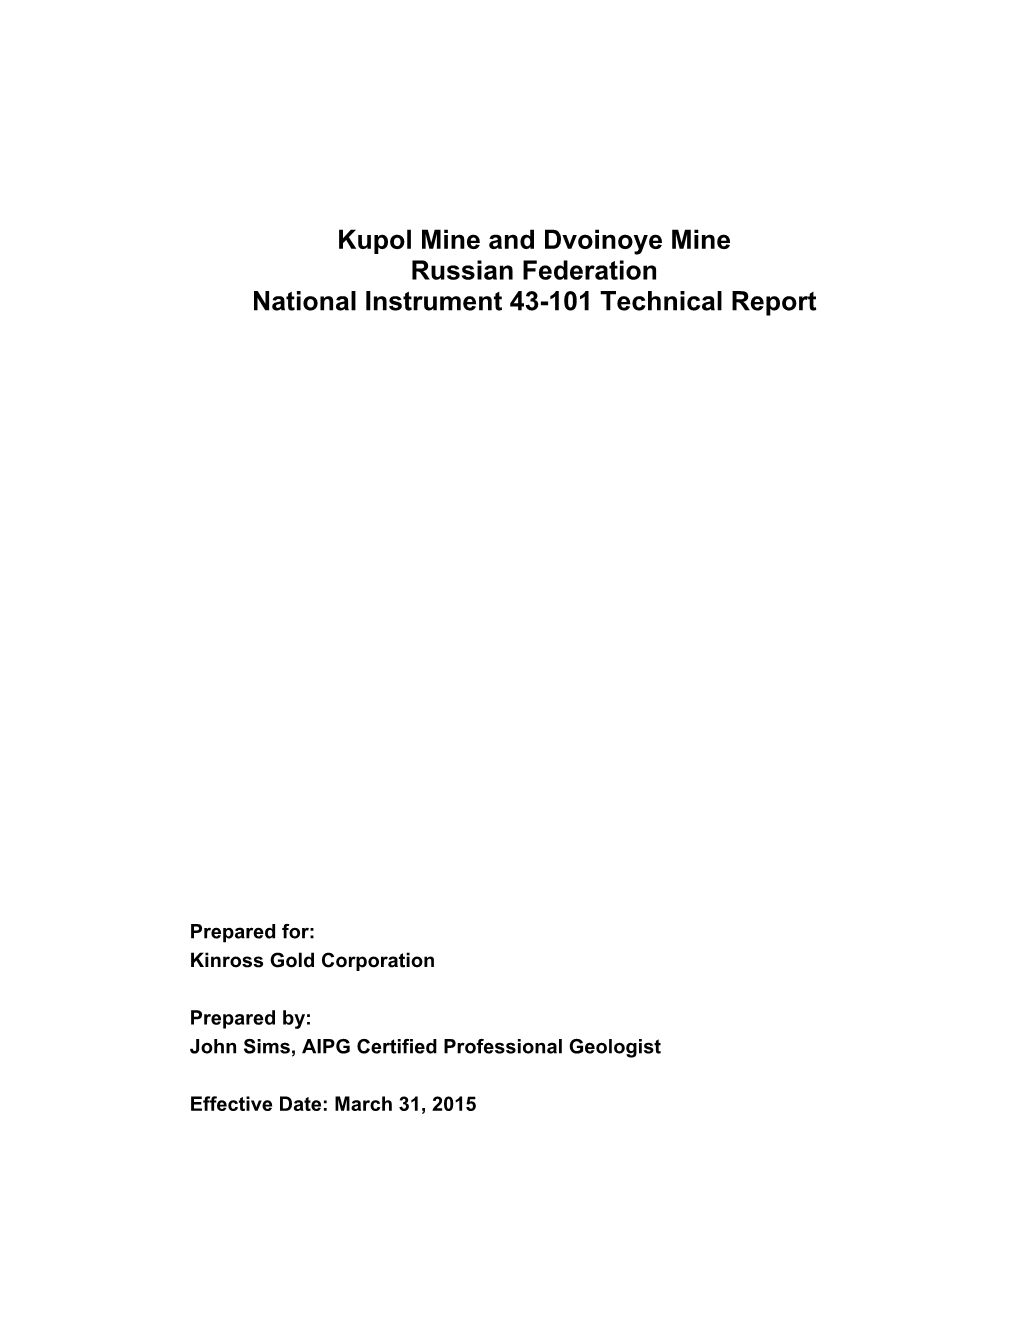 Kupol Mine and Dvoinoye Mine Russian Federation National Instrument 43-101 Technical Report